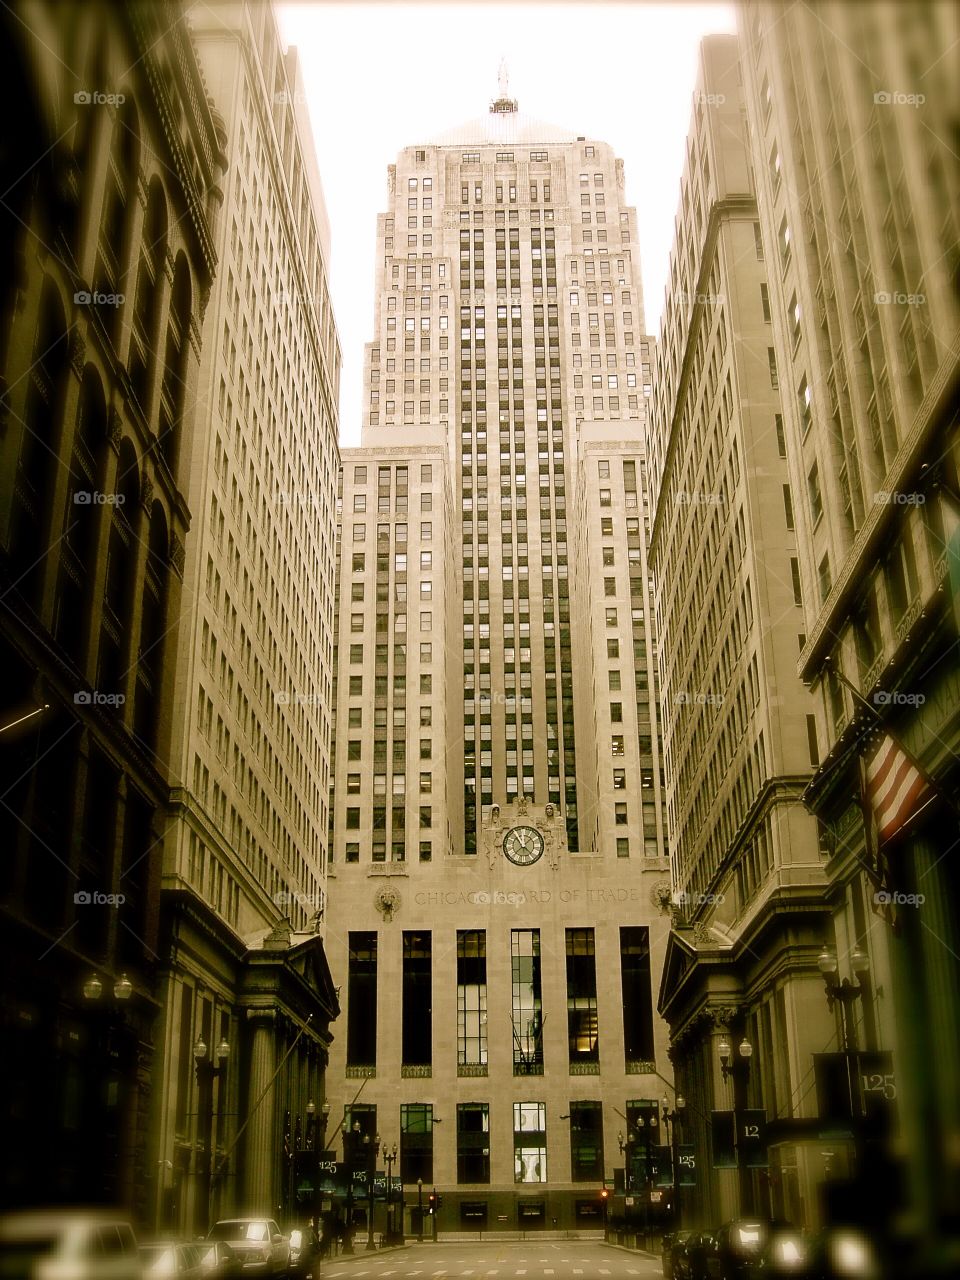 Lasalle street Chicago looking toward the stock exchange 